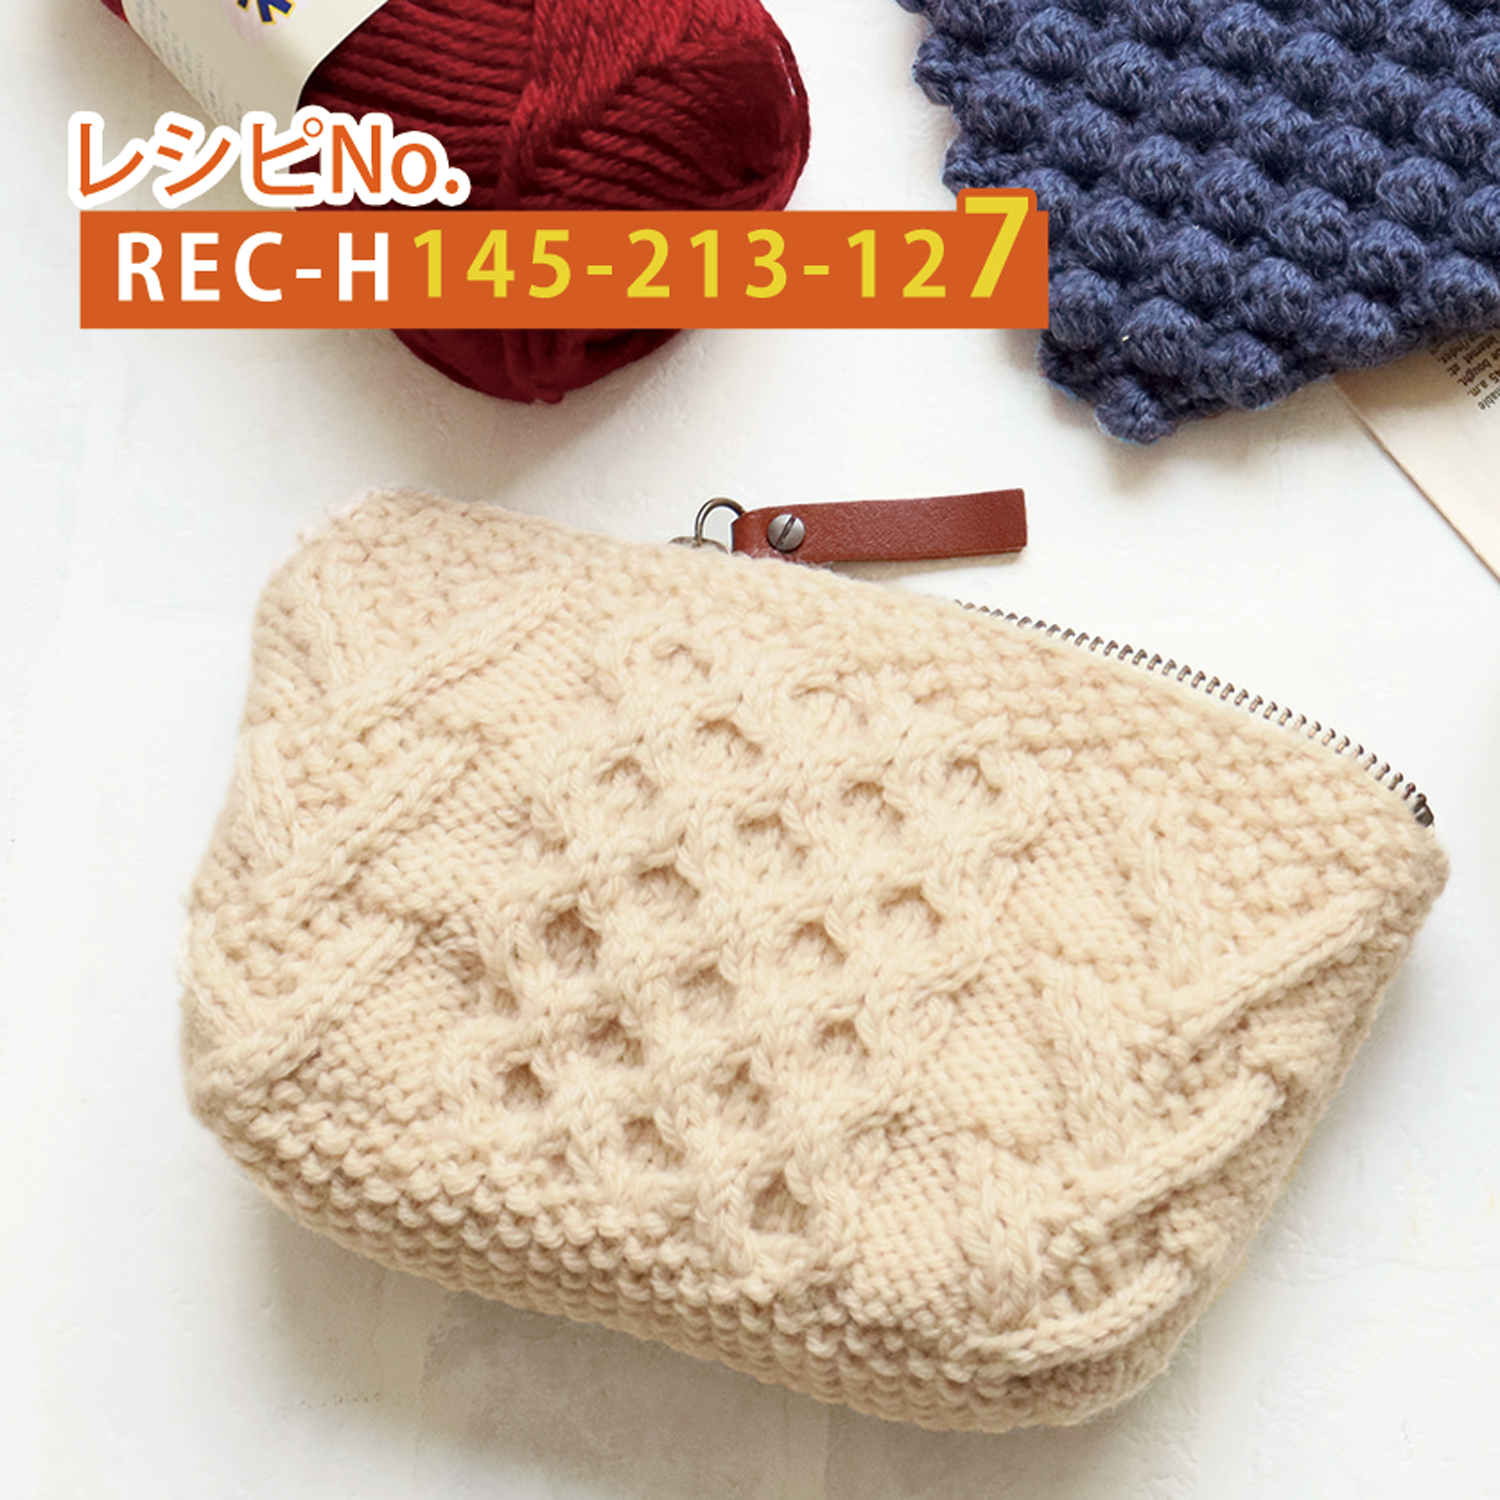 REC-H145-213-127 Purse Knitting Instructions (using Amelie yarn) (pcs)